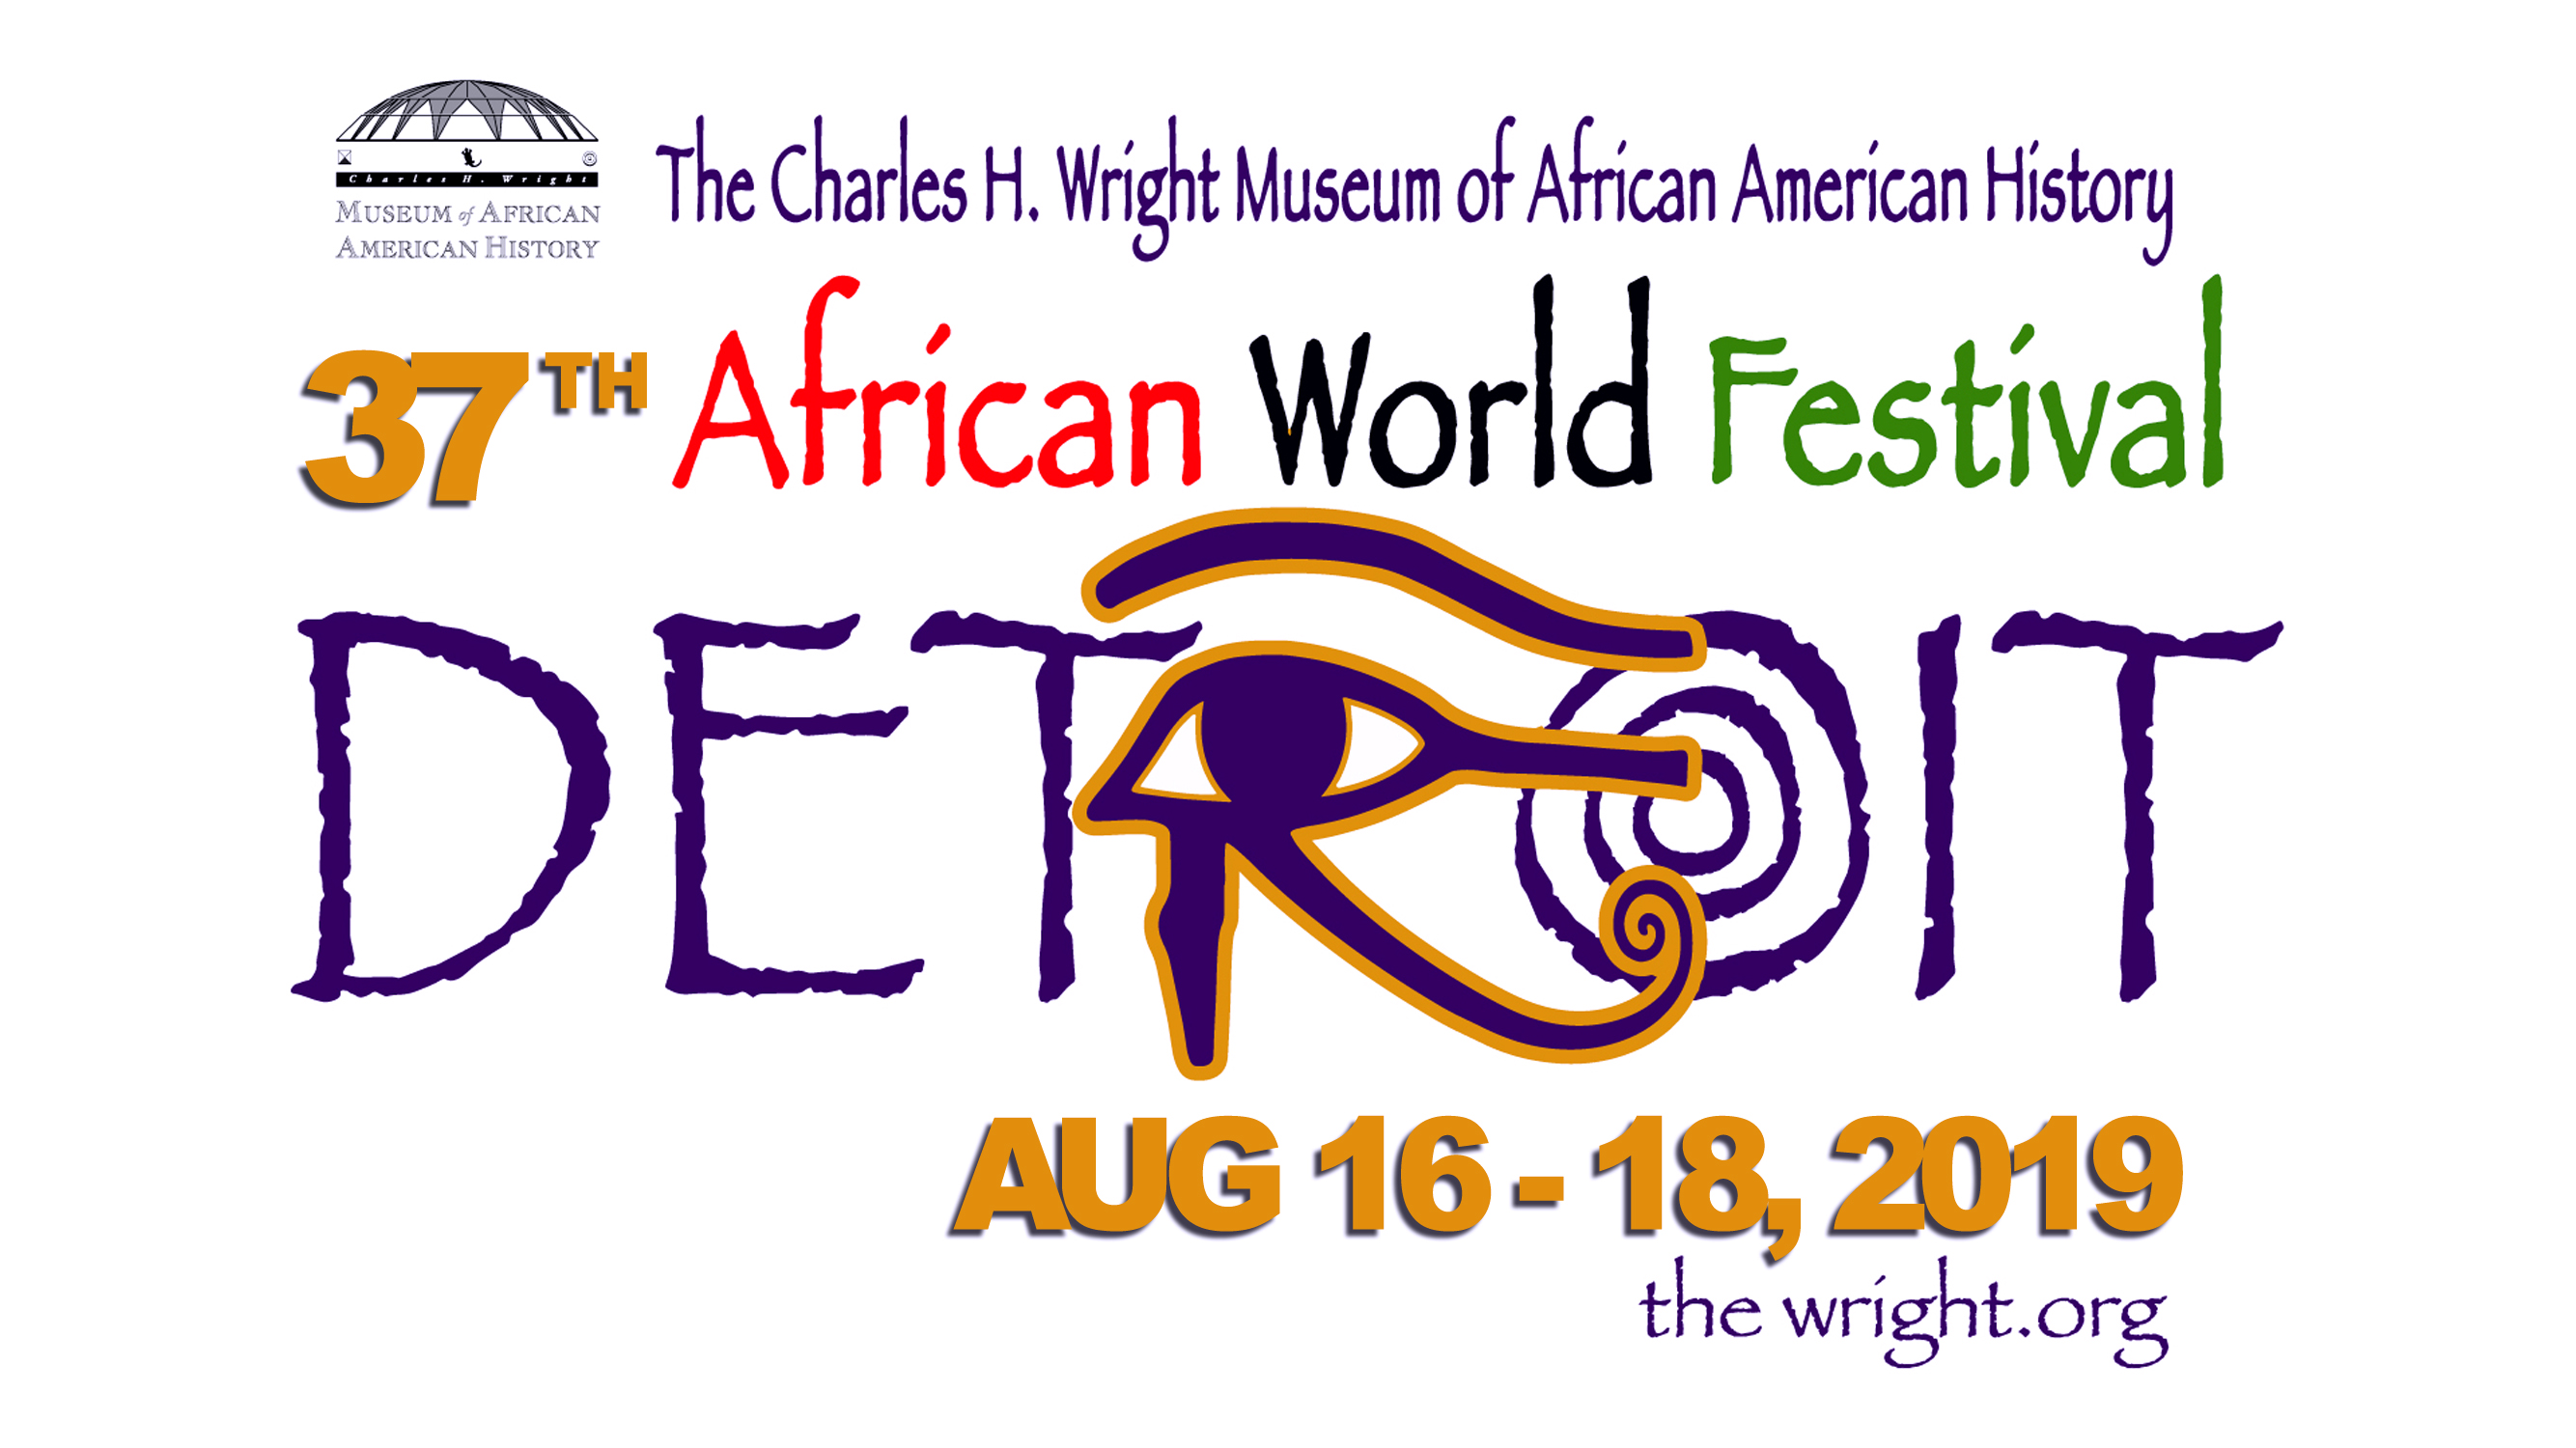 37th annual African World Festival